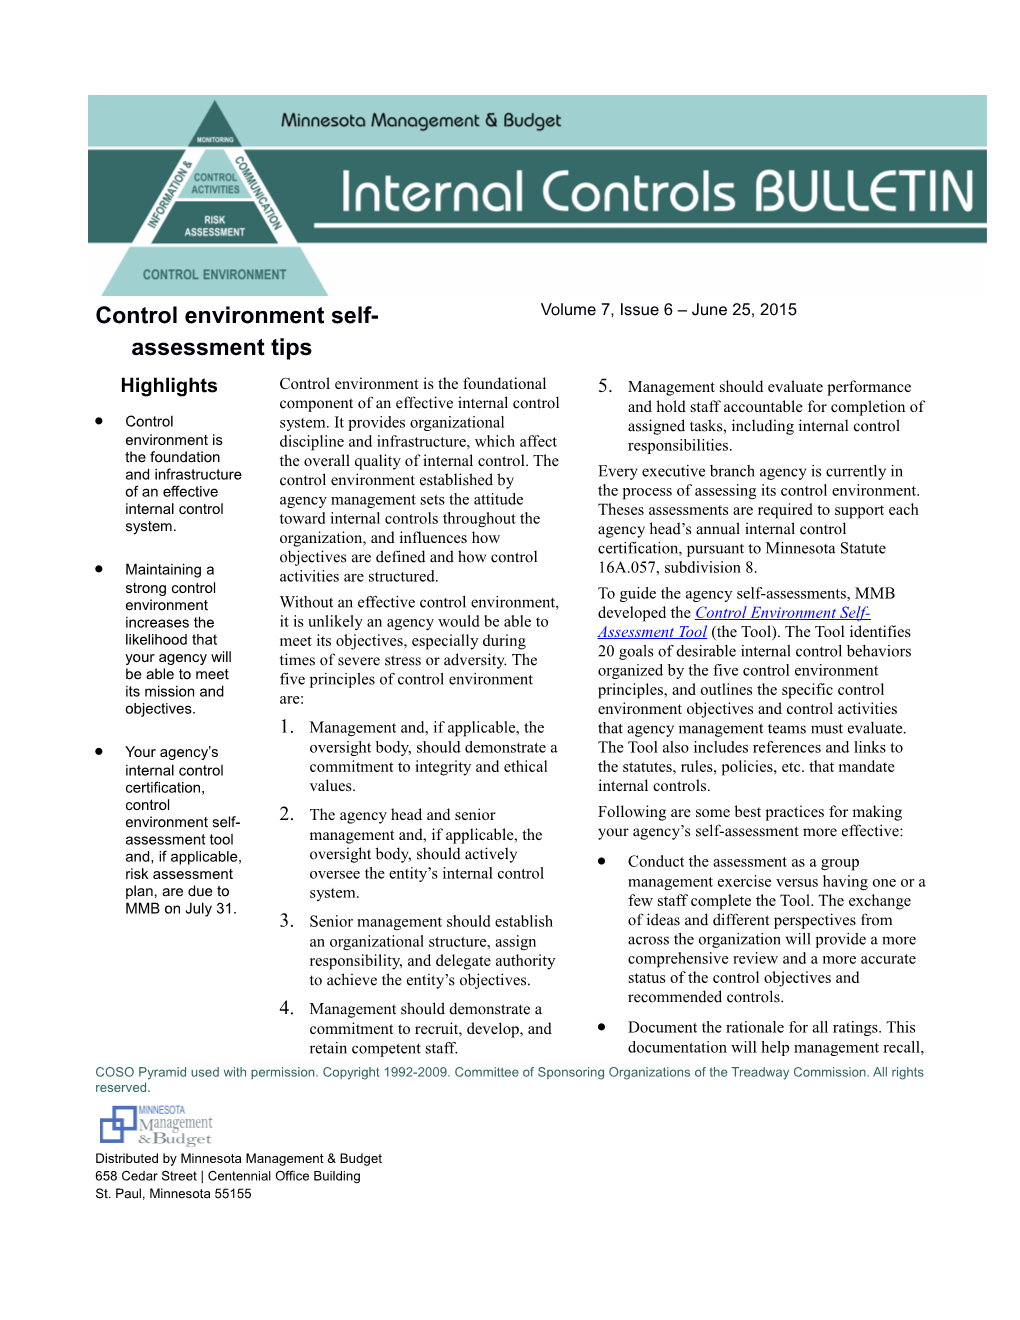 June 25, 2015, Control Environment Self-Assessment Tips